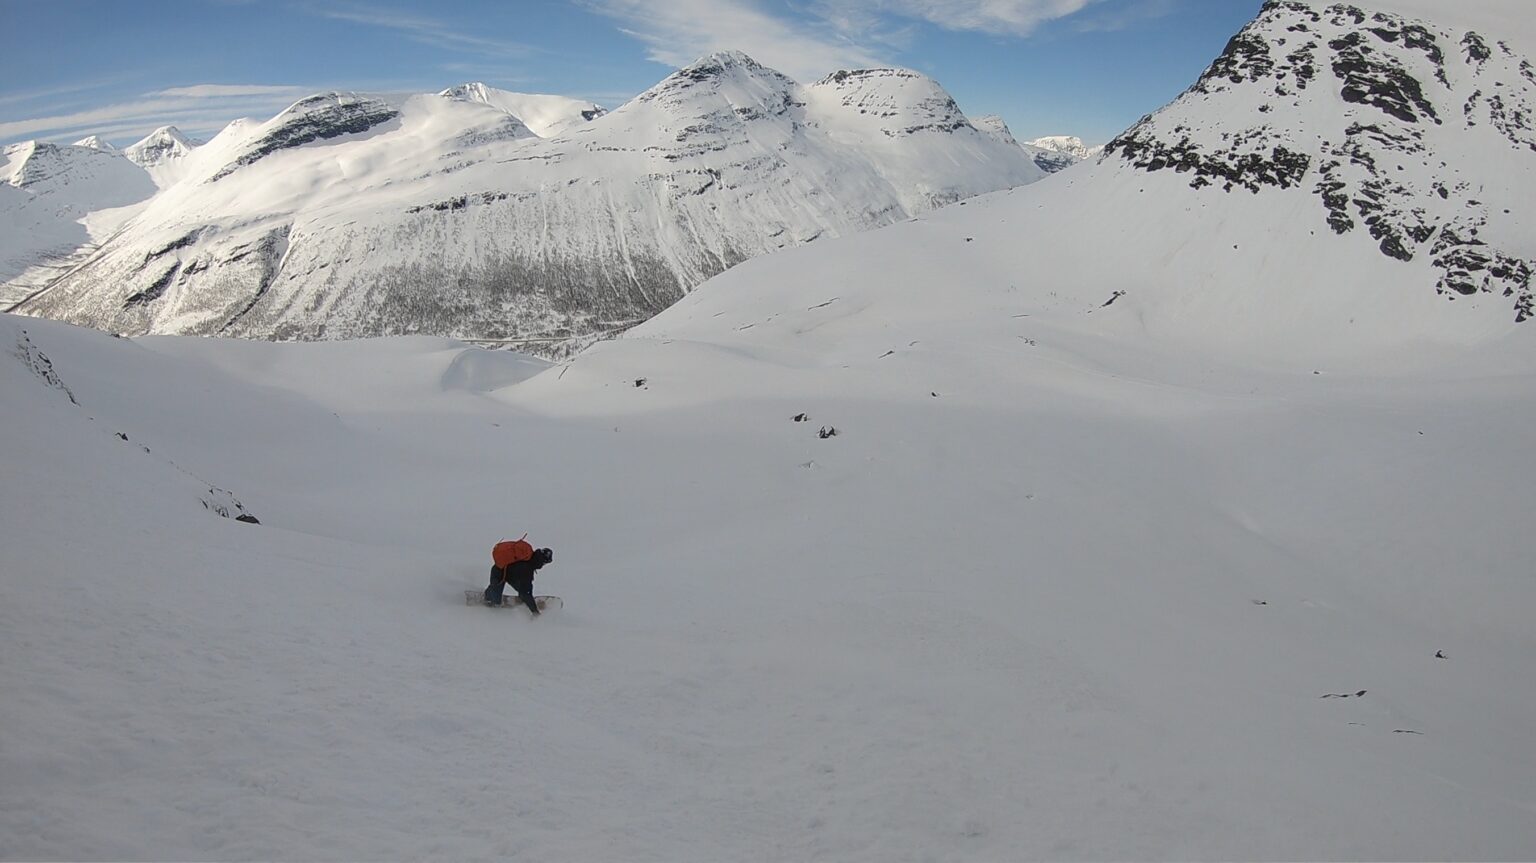 Snowboarding down the open terrain below